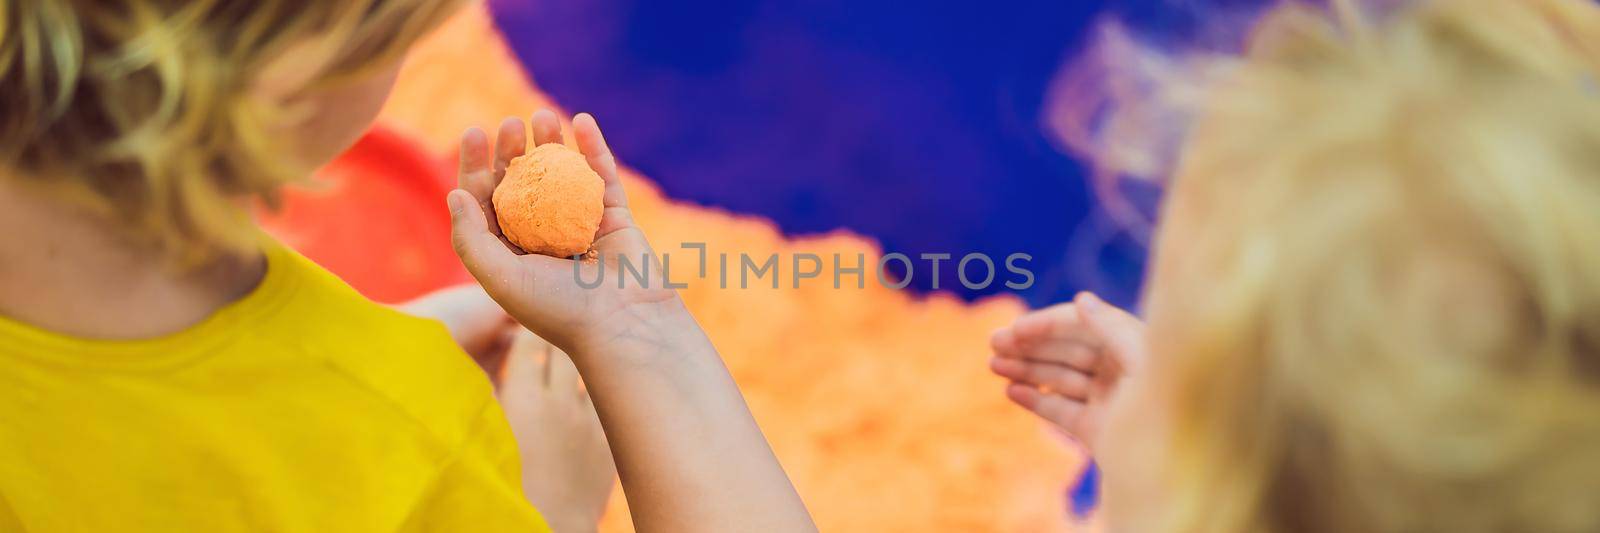 Boy and girl play with kinetic sand BANNER, LONG FORMAT by galitskaya